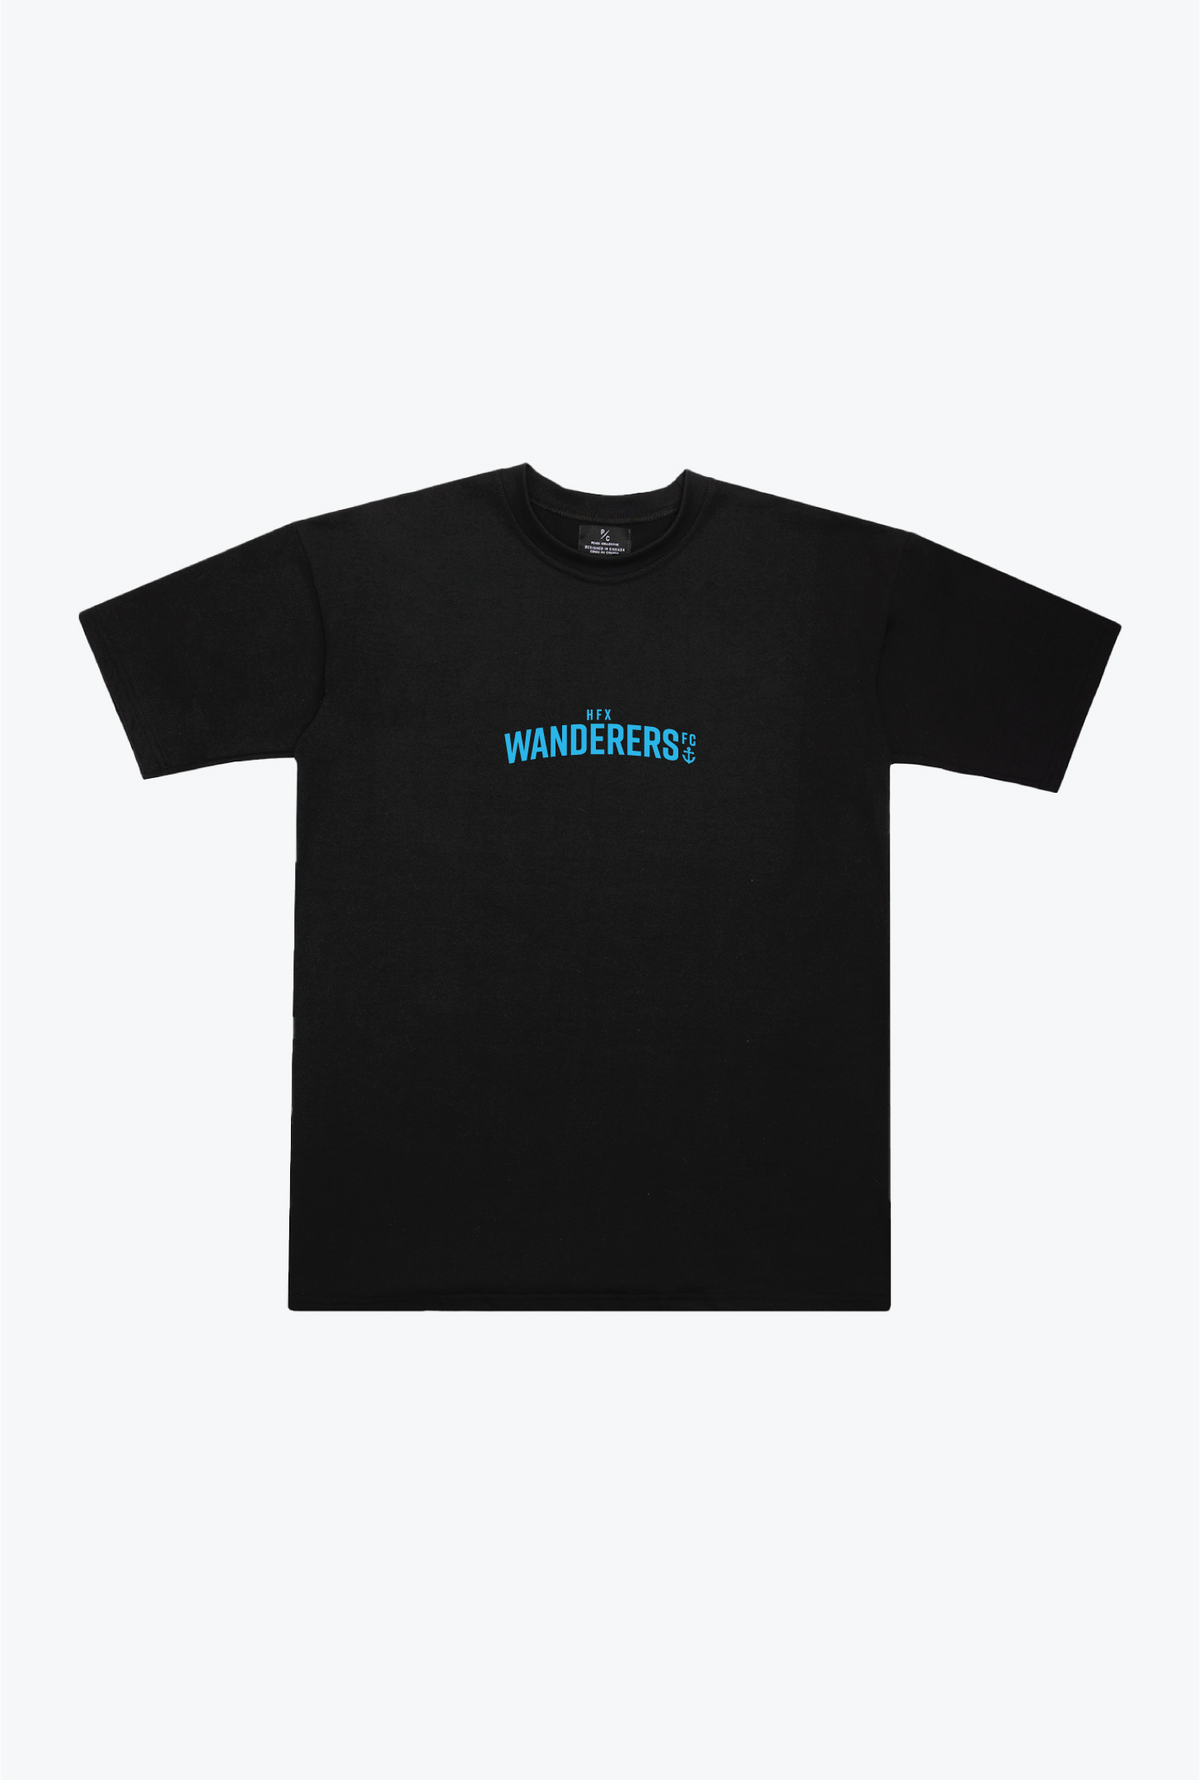 Halifax Wanderers Heavyweight T-Shirt - Black